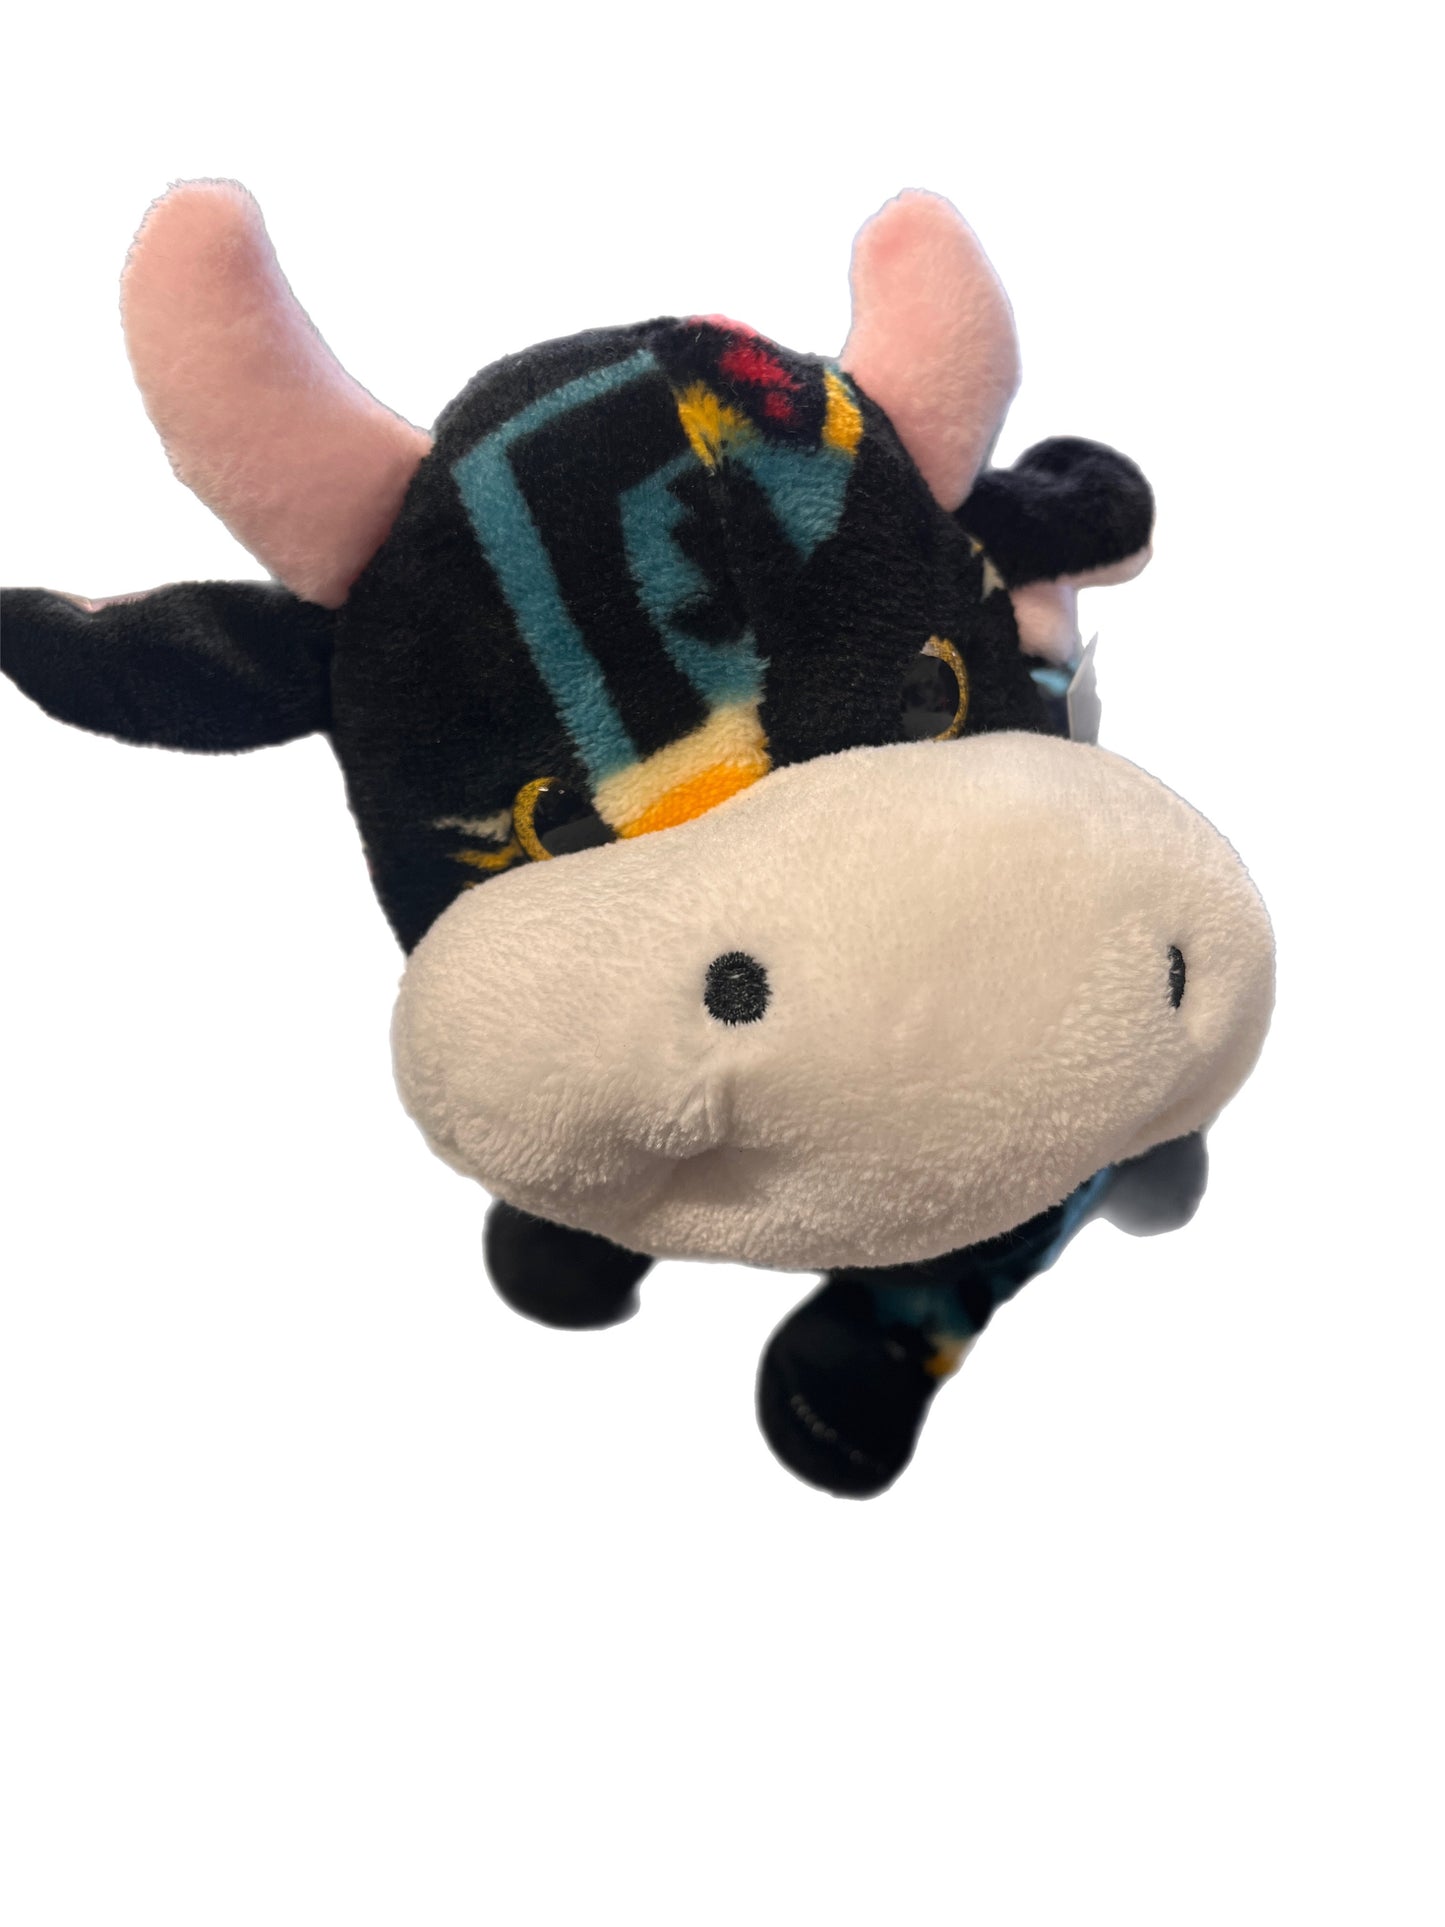 Plush Stuffed Standing Cow